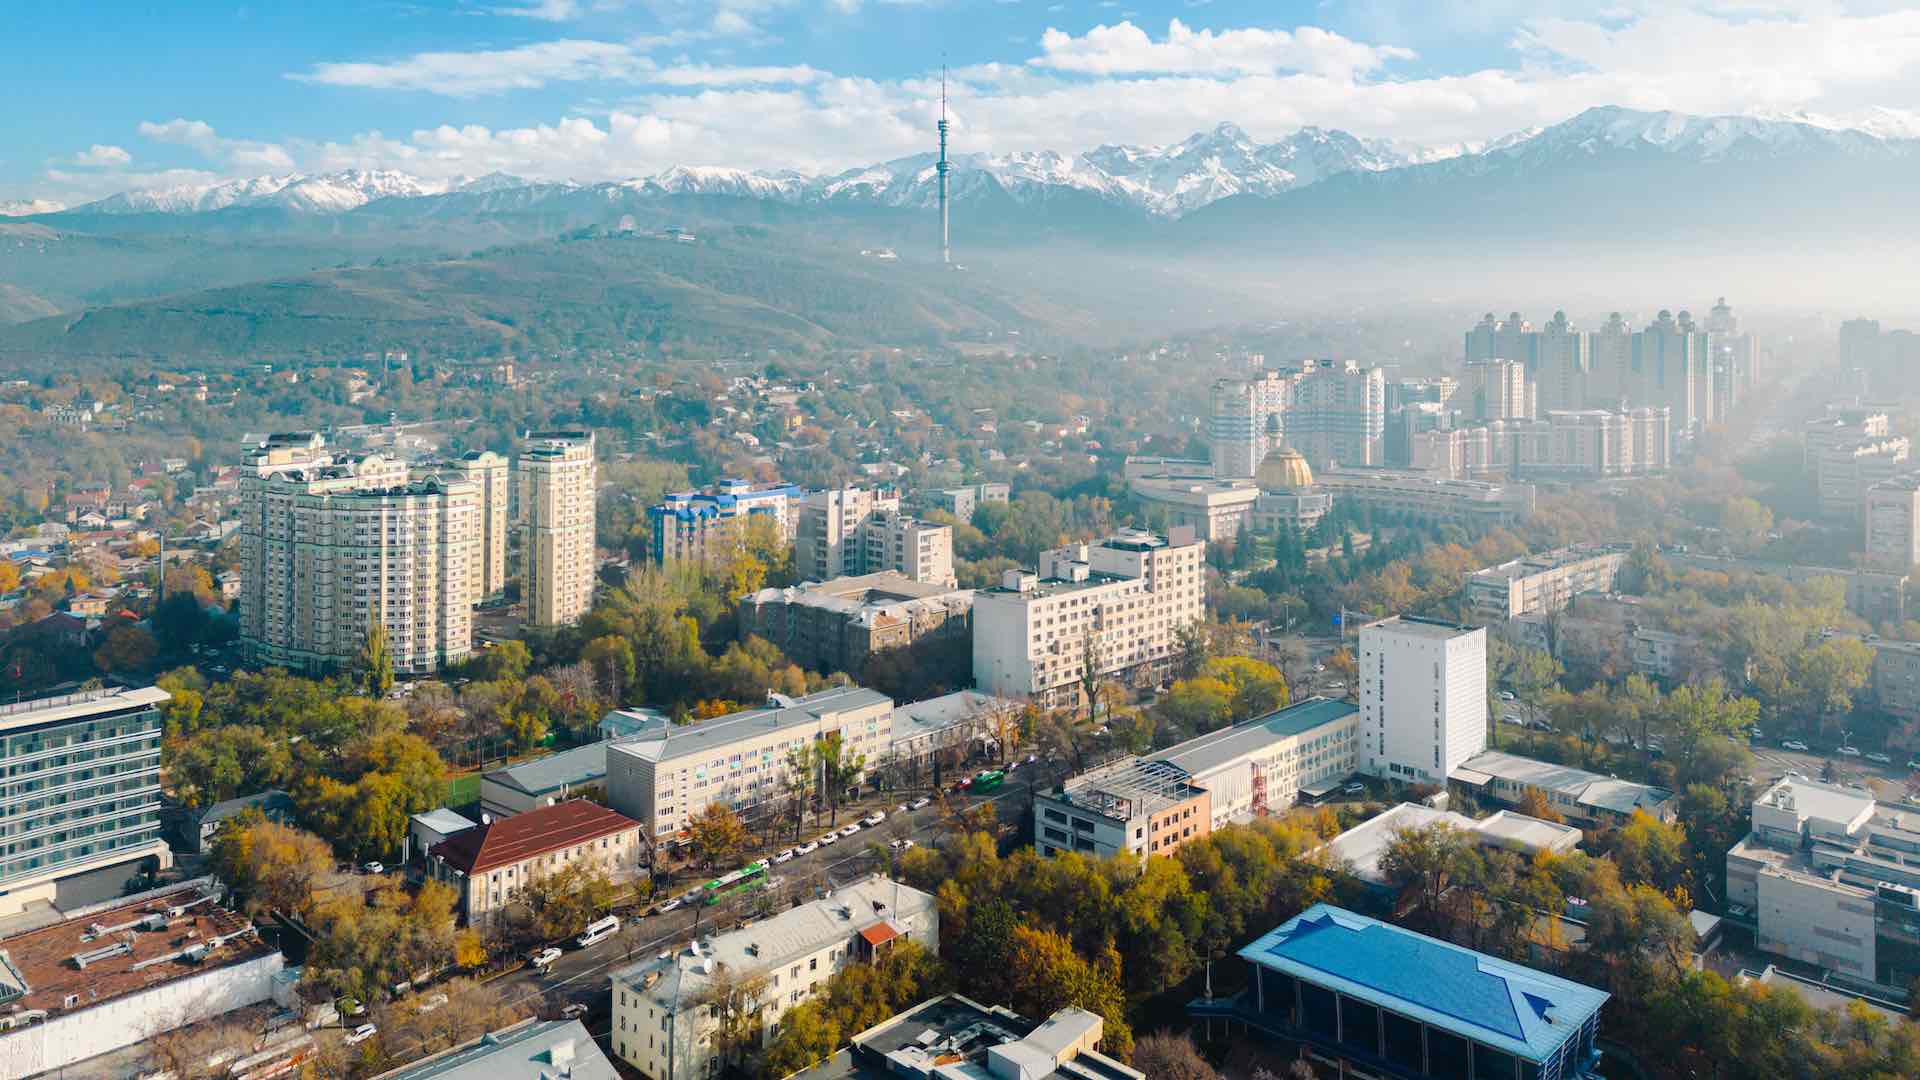 Almaty, Kazakhstan, rocked by earthquake